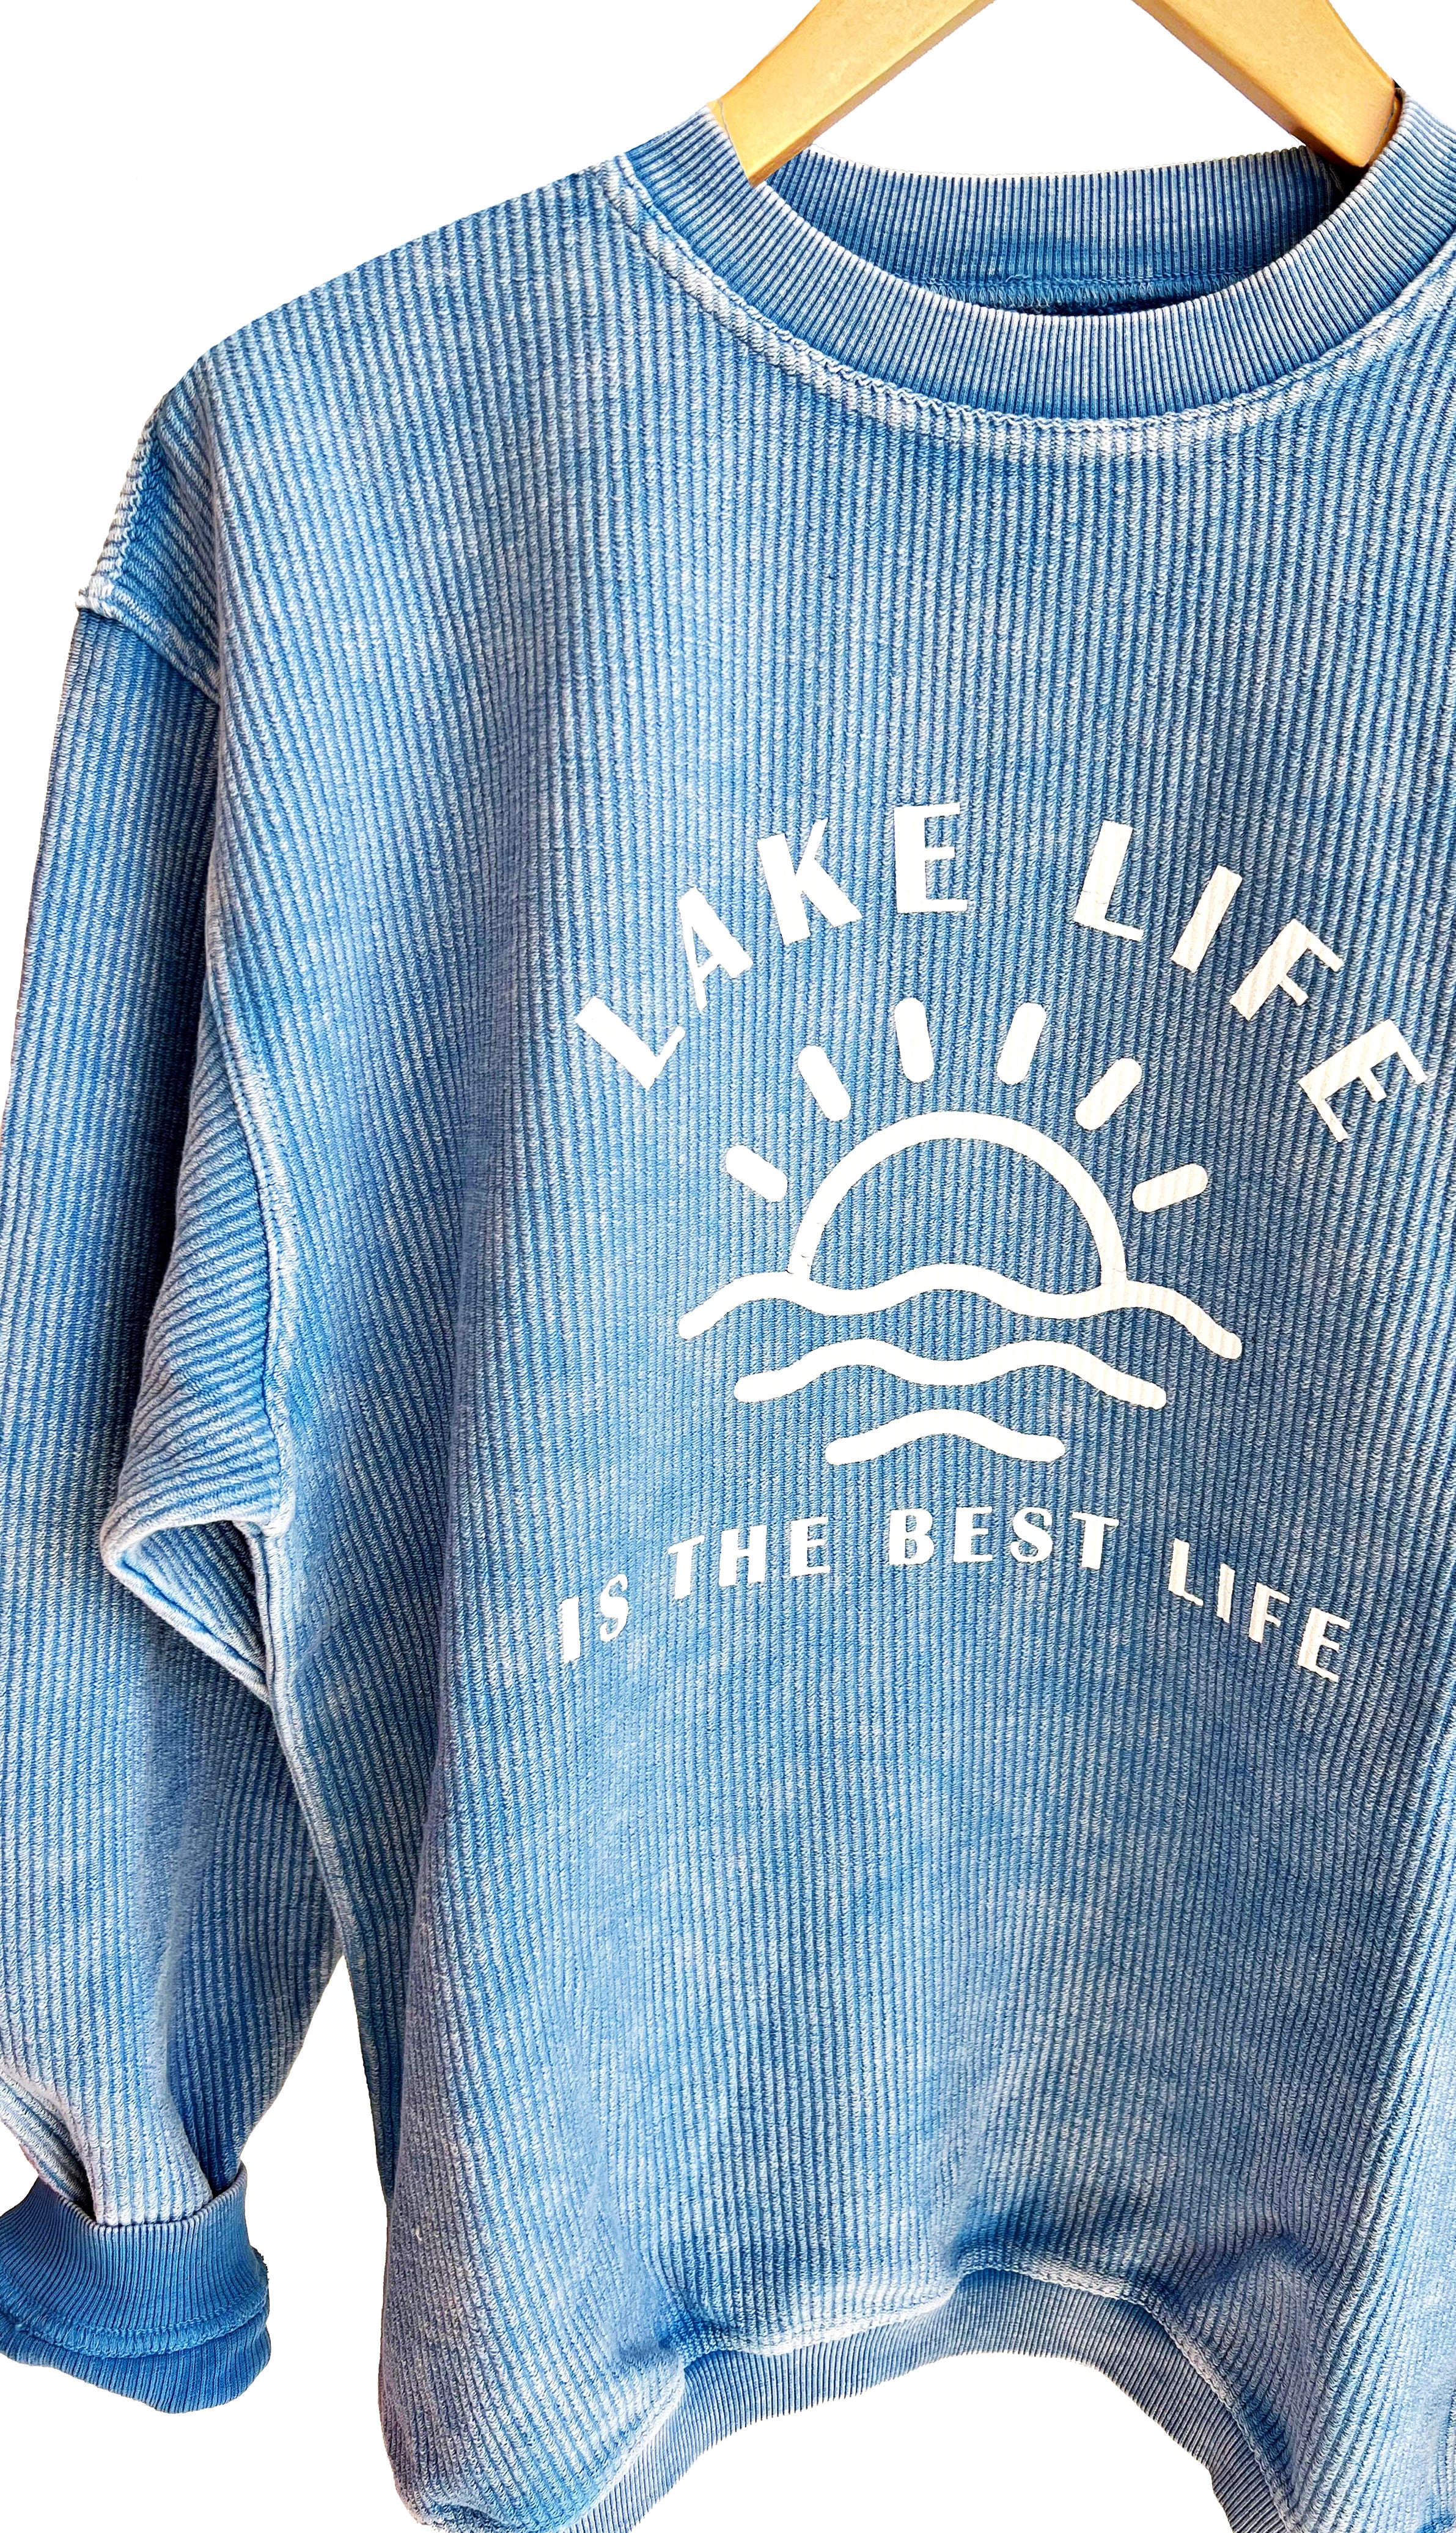 Lake Life Is The Best Life Corded Crewneck Sweatshirt- Light Blue